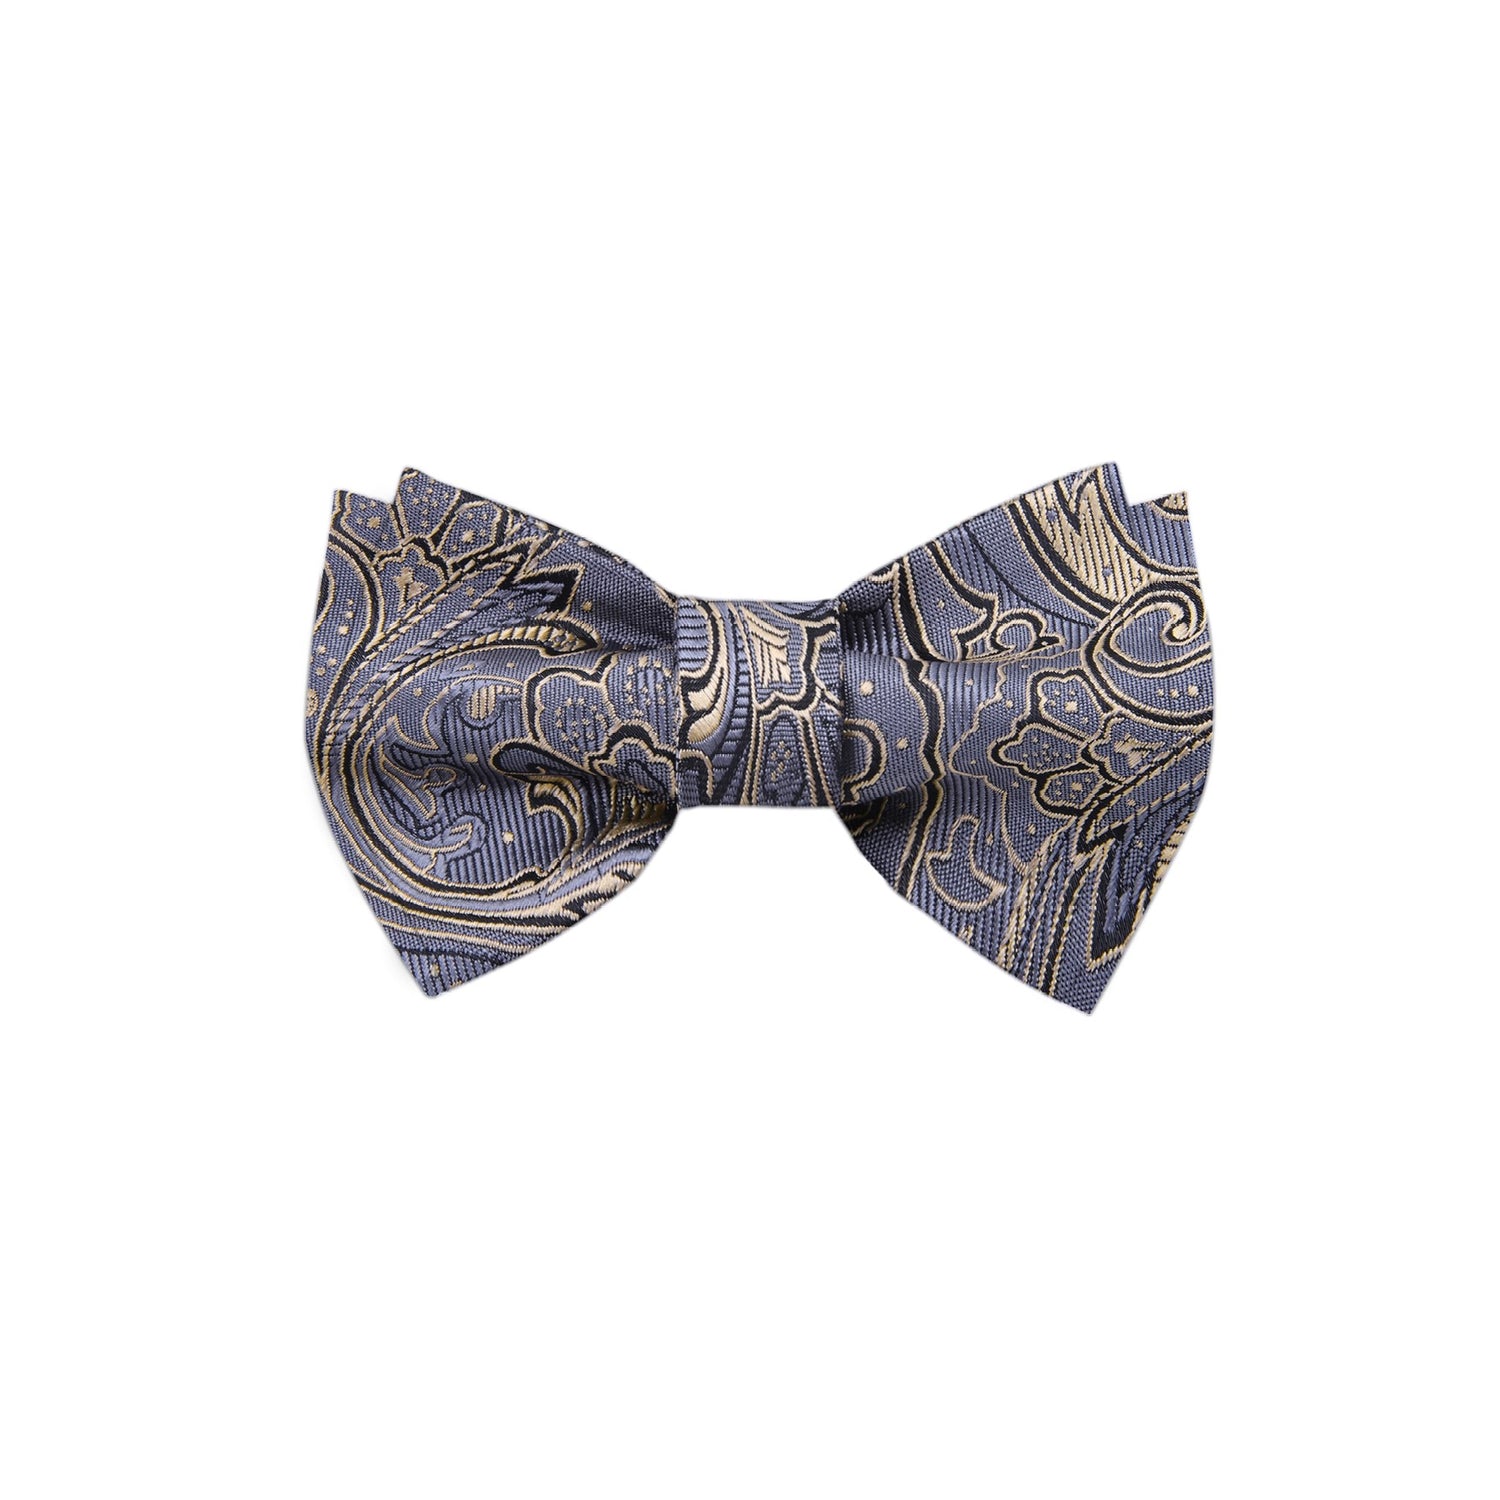 A Grey, Cream, Black Intricate Paisley Pattern Silk Self-Tie Bow Tie 